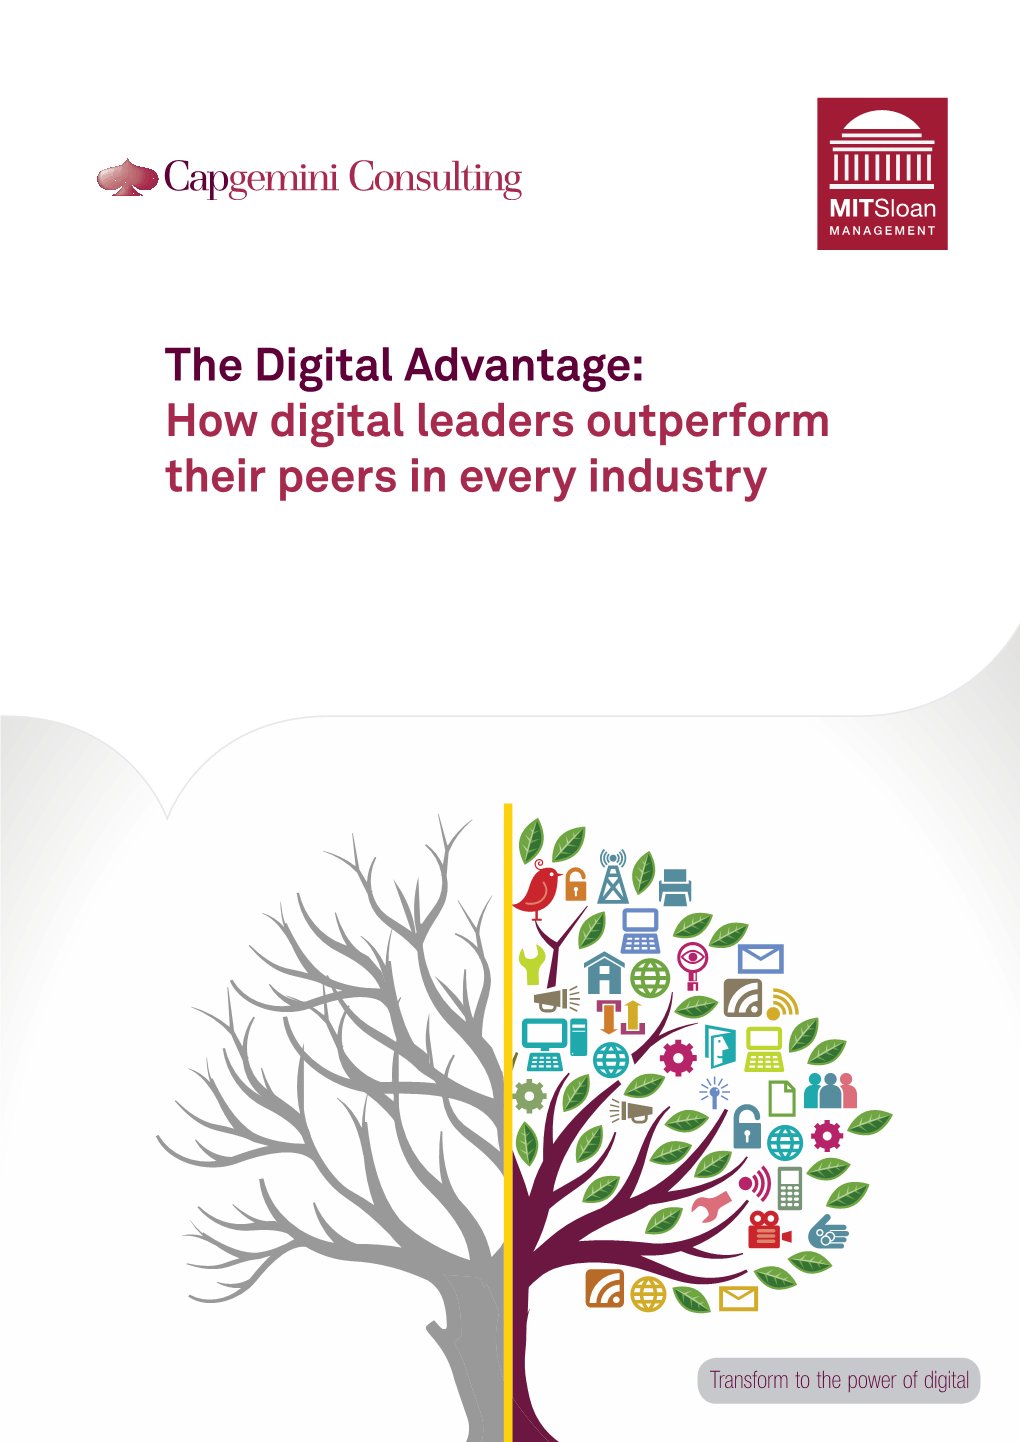 The Digital Advantage: How Digital Leaders Outperform Their Peers in Every Industry